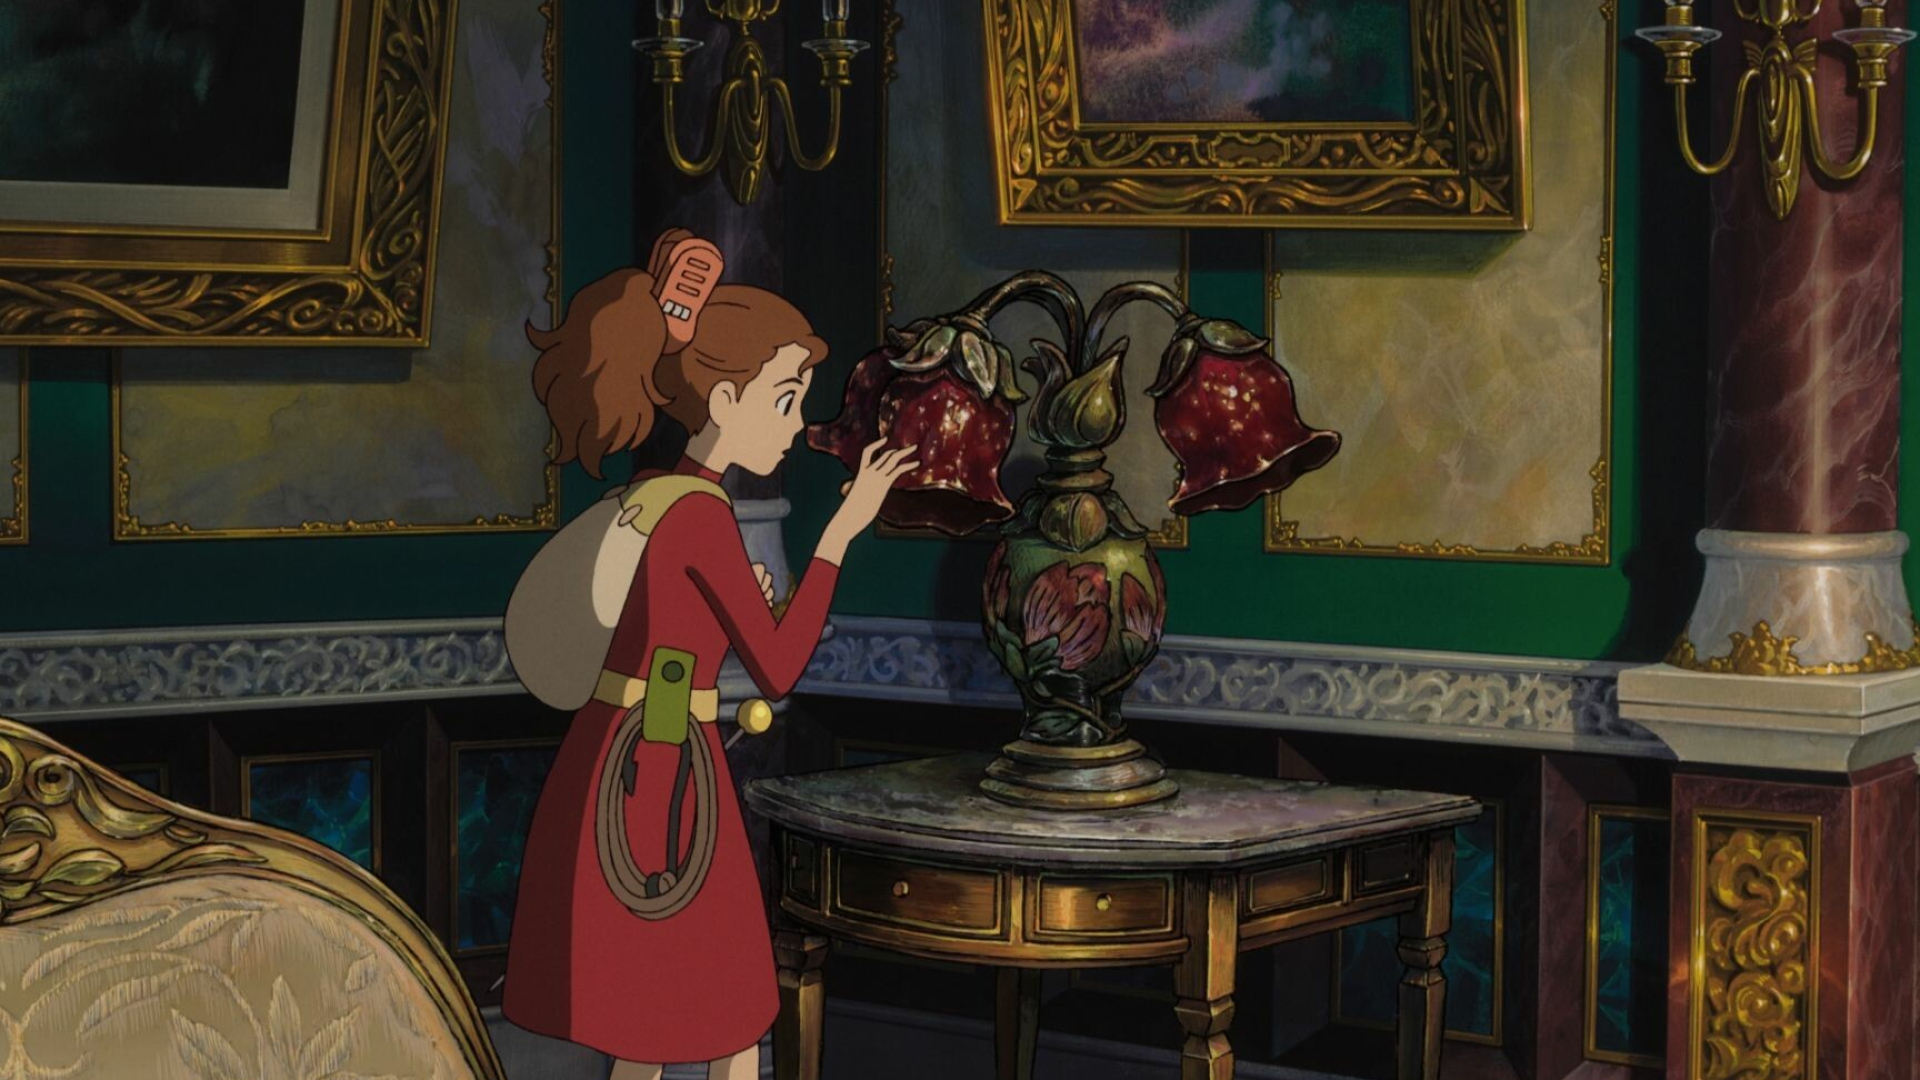 The Secret World of Arrietty: A 2010 animated film by Studio Ghibli, directed by Hiromasa Yonebayashi. 1920x1080 Full HD Background.